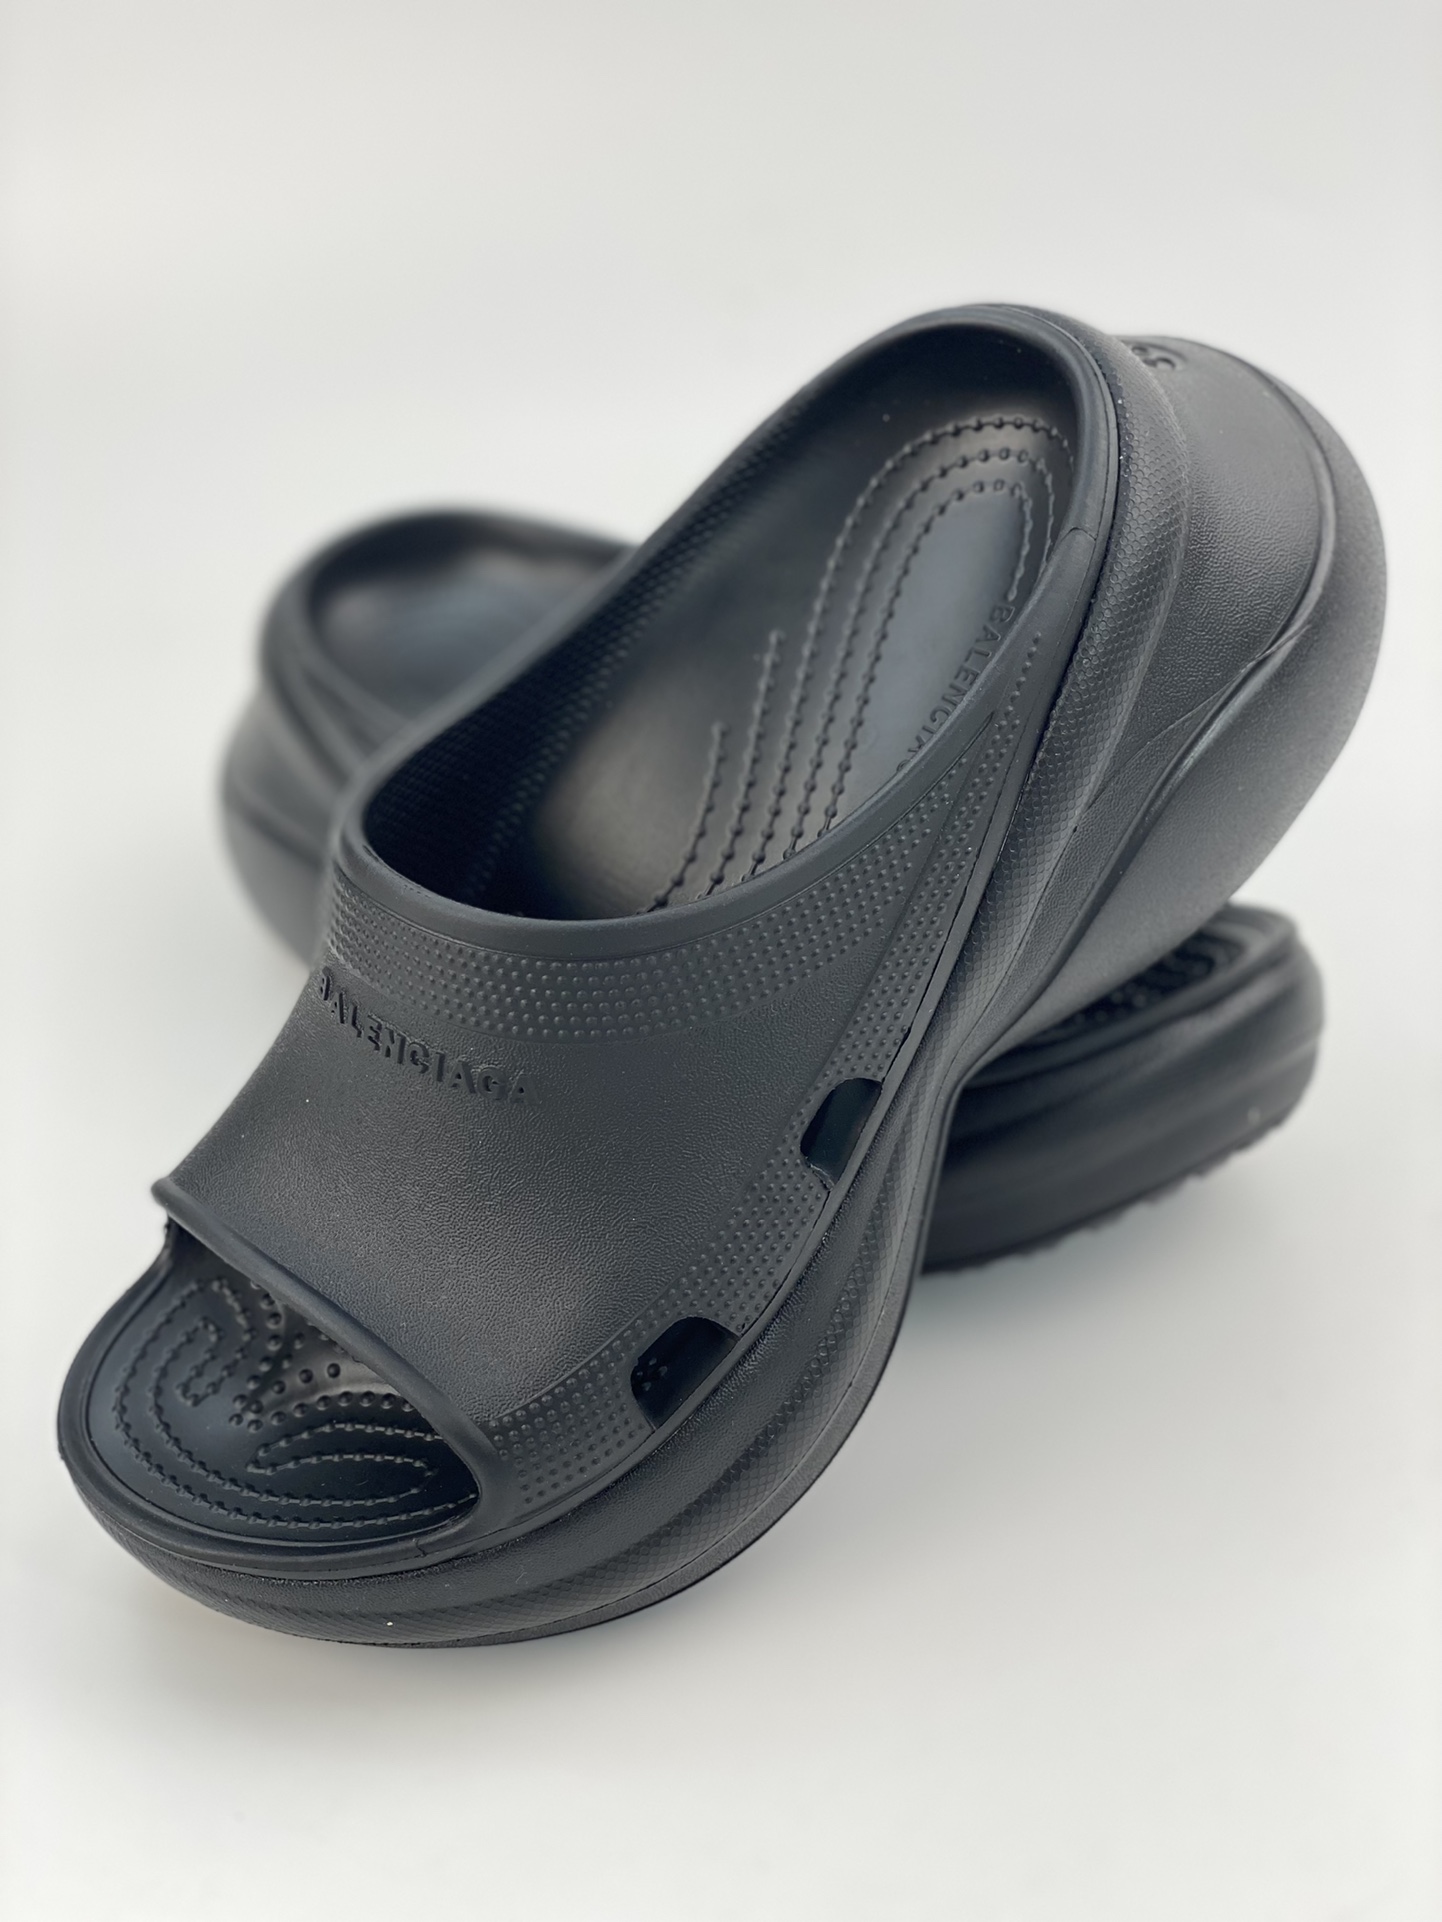 Balenciaga x Crocs Pool Platform Slide Sandals Muller series platform thick-soled slipper sandals